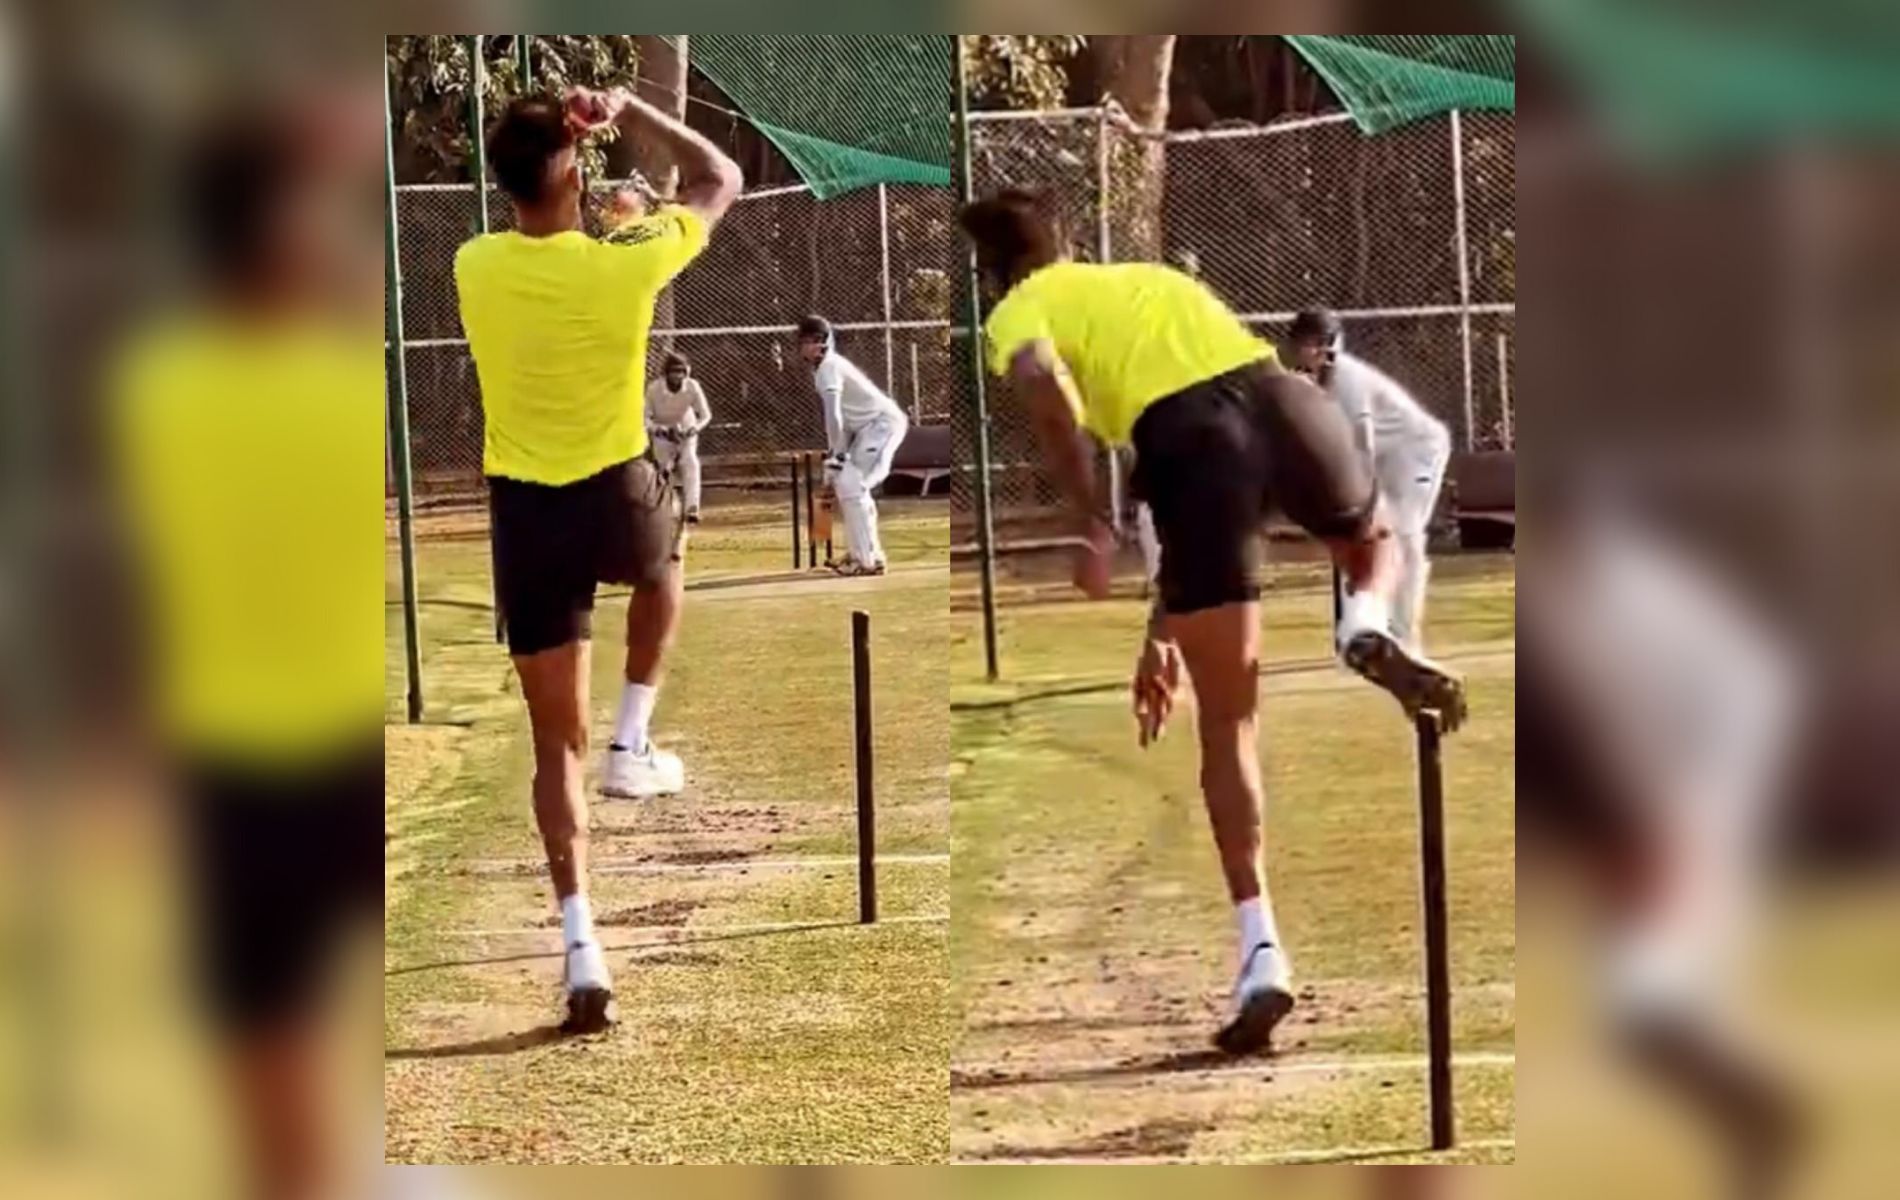 Hardik Pandya bowls in the nets. (Image source: Instagram)